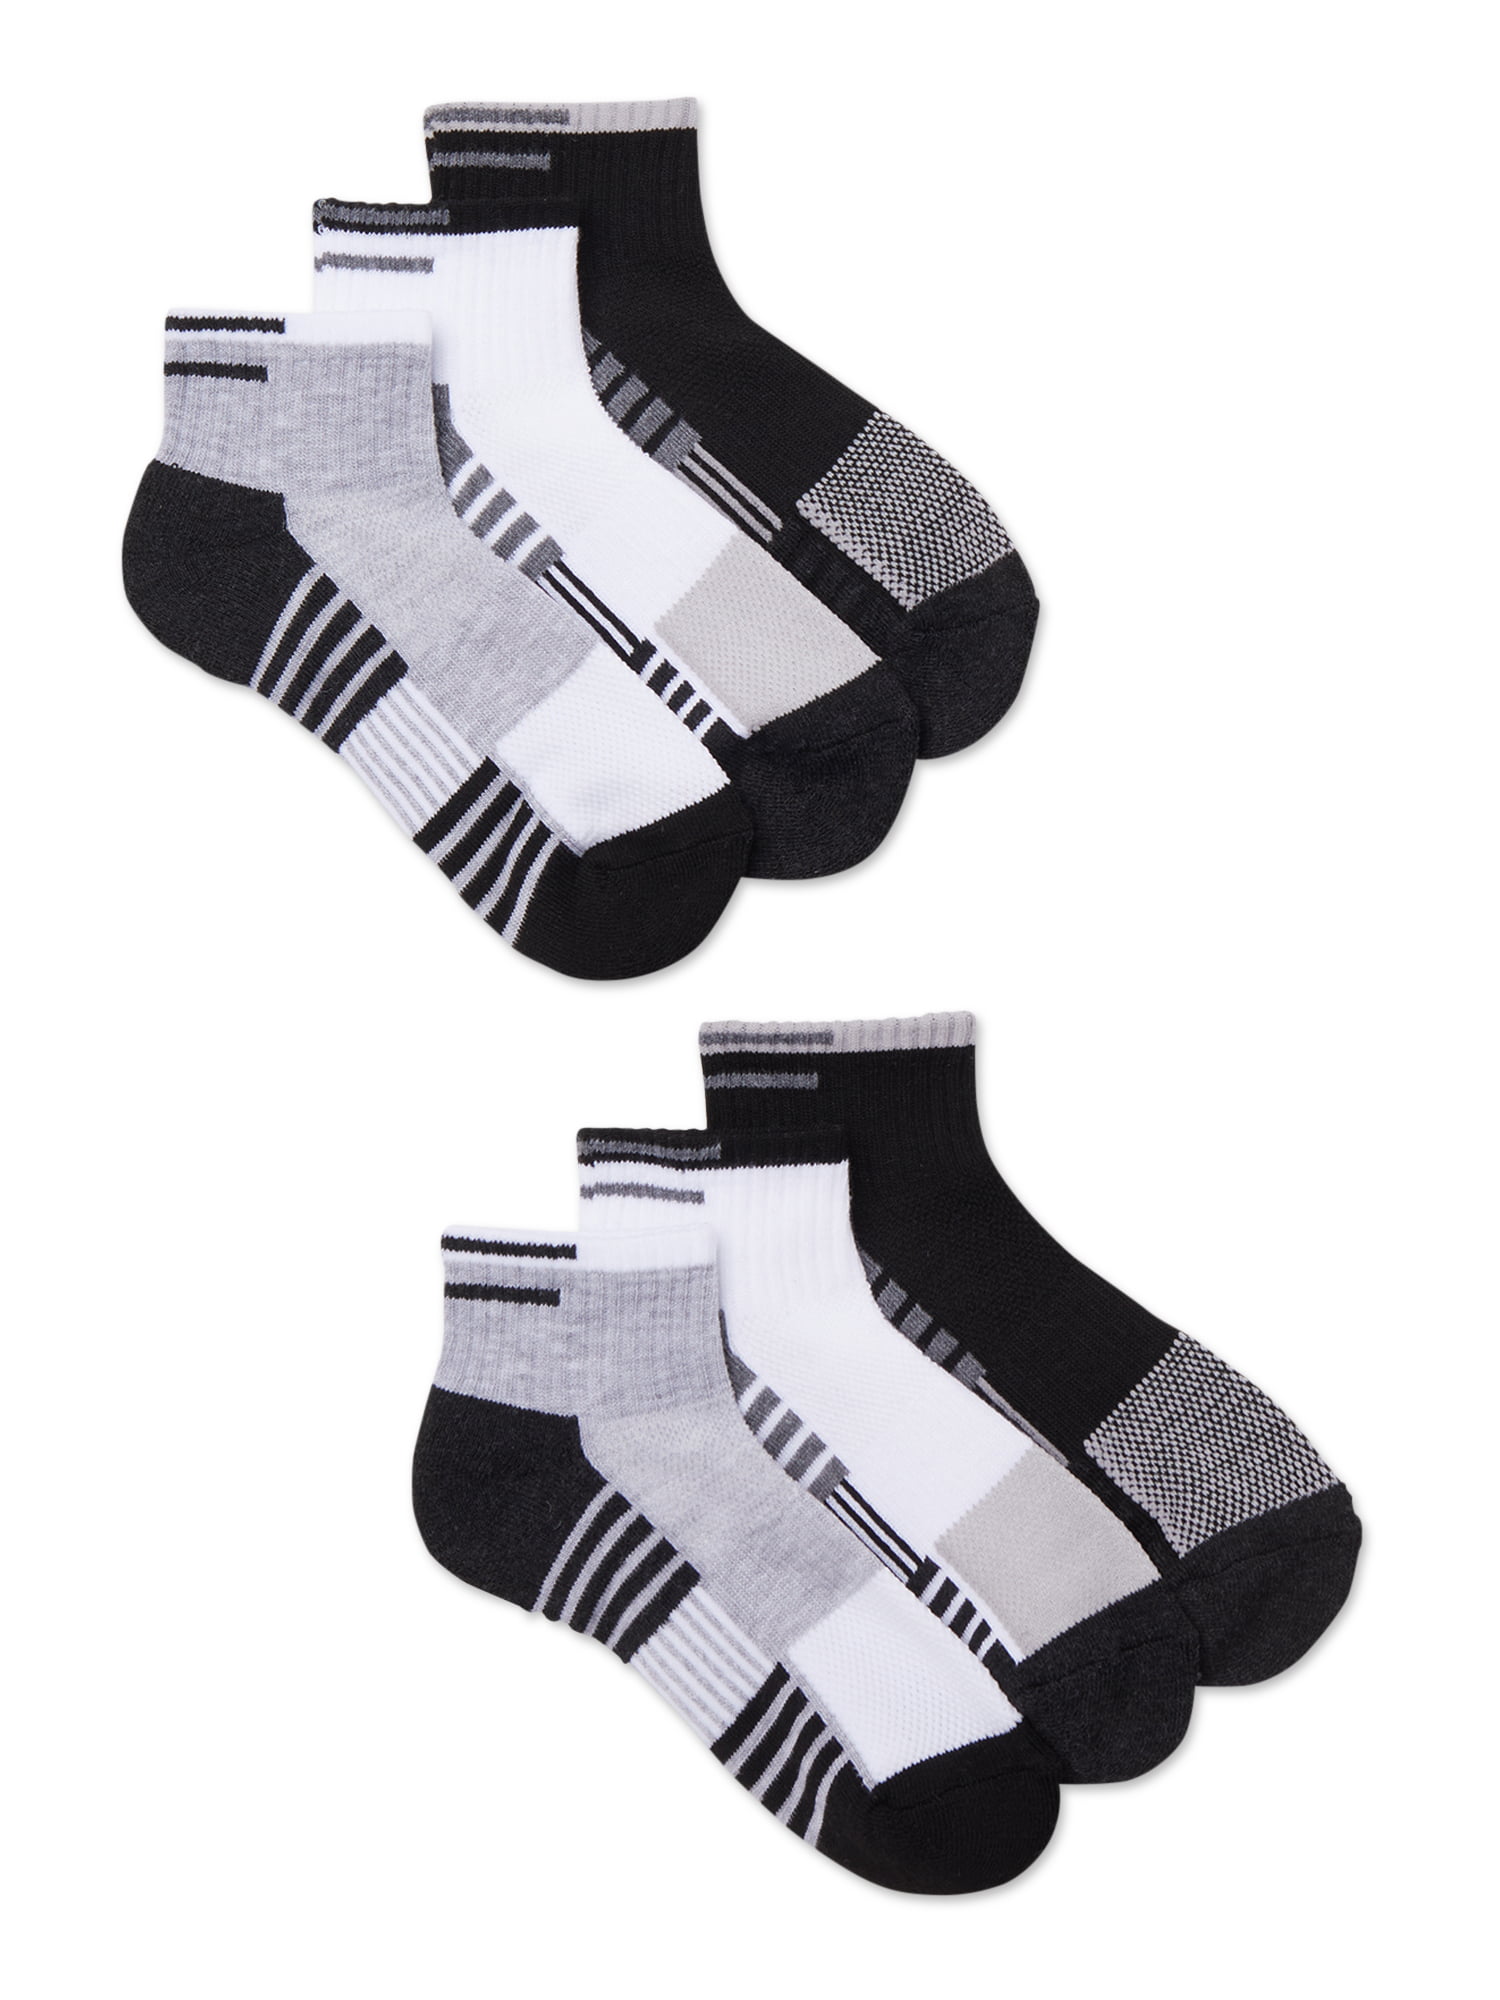 Athletic Works Boys Ankle Socks, 6 Pack - Walmart.com